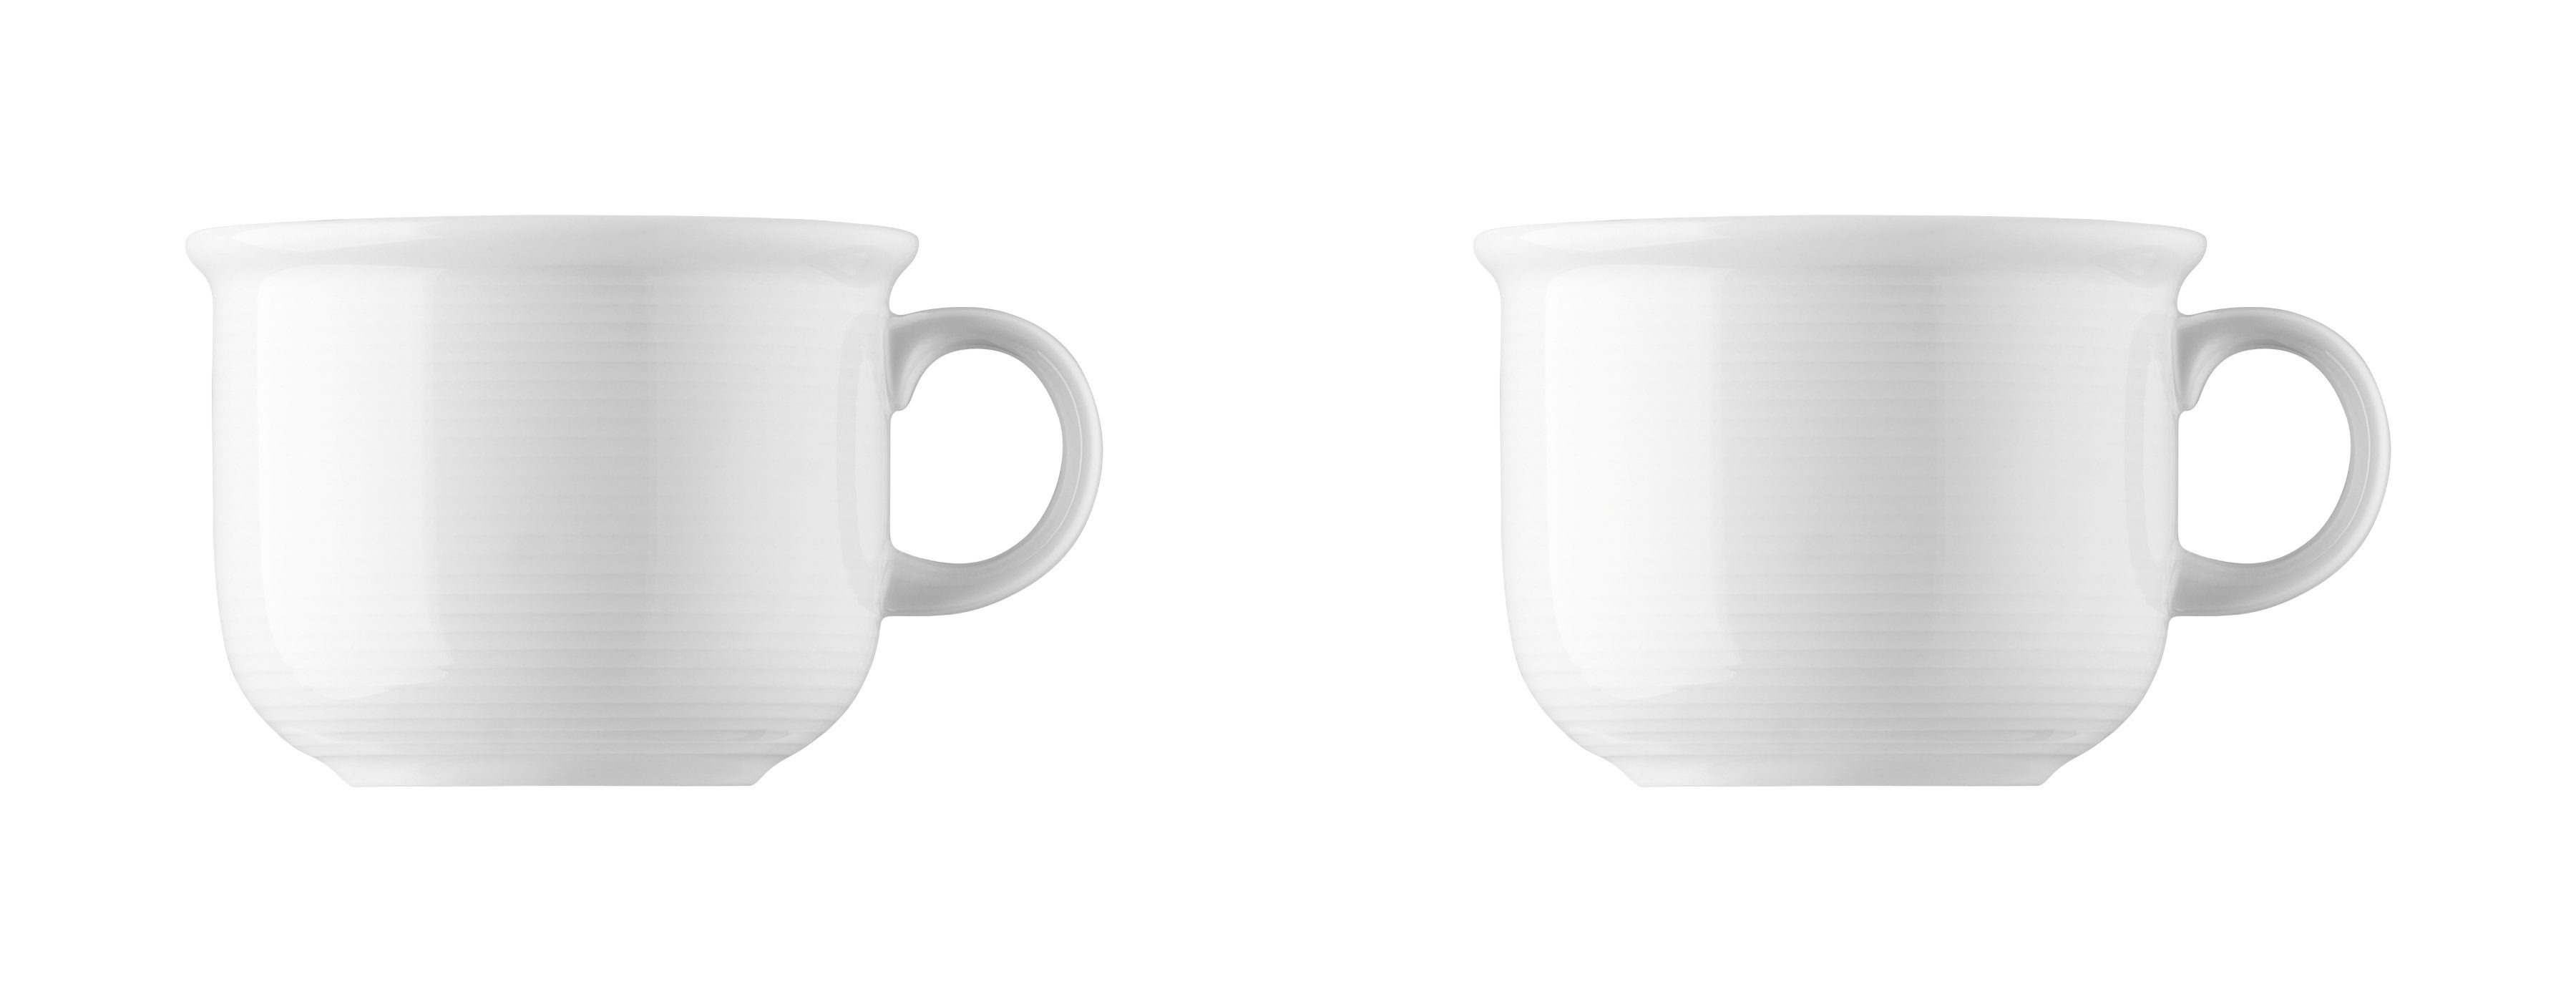 Thomas Porzellan Tasse Kaffee-Obertasse - TREND Weiß - 2 Stück, Porzellan, Porzellan, spülmaschinenfest und mikrowellengeeignet